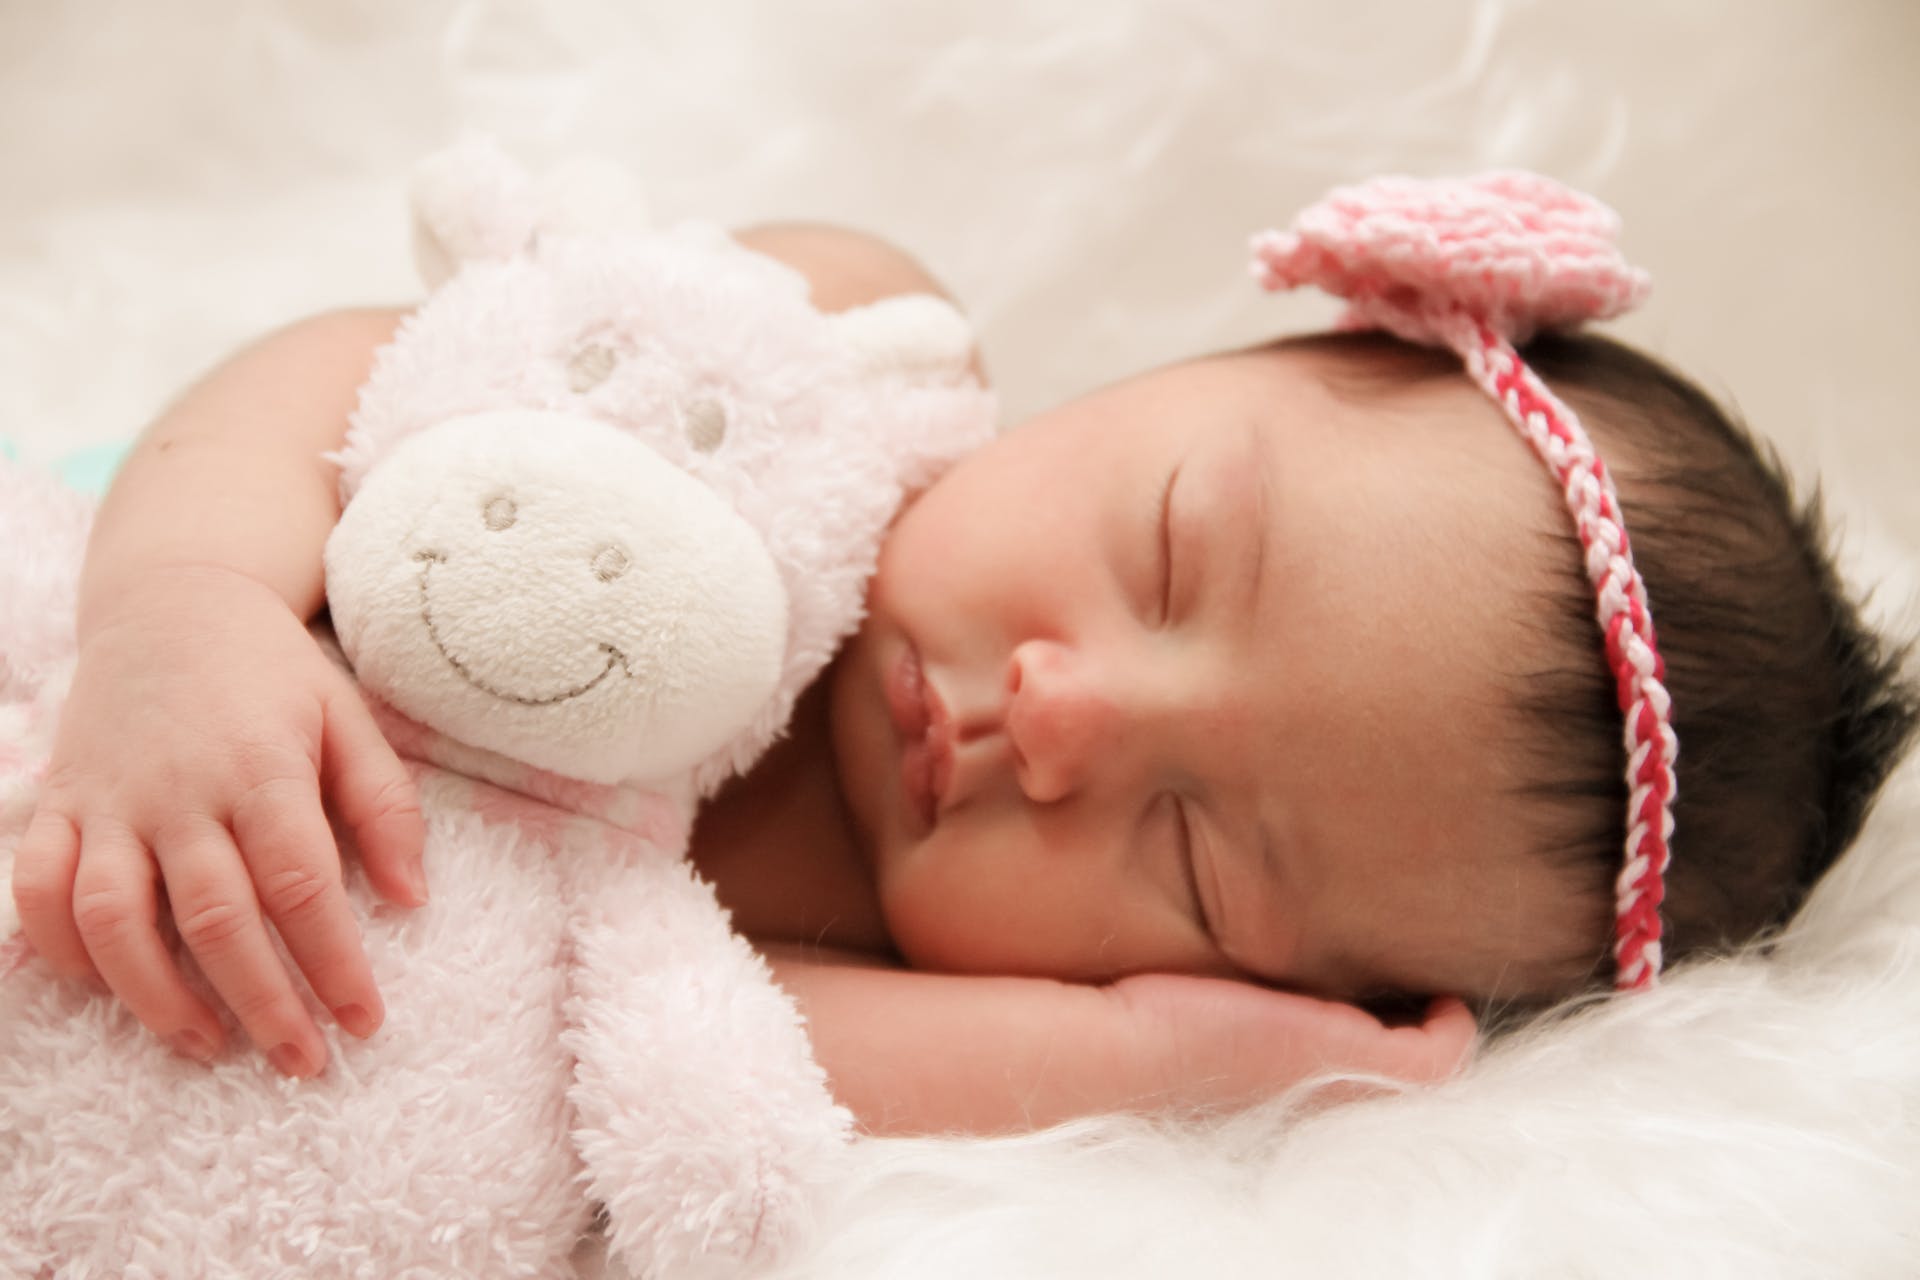 Newborn baby holding a stuffed animal | Source: Pexels